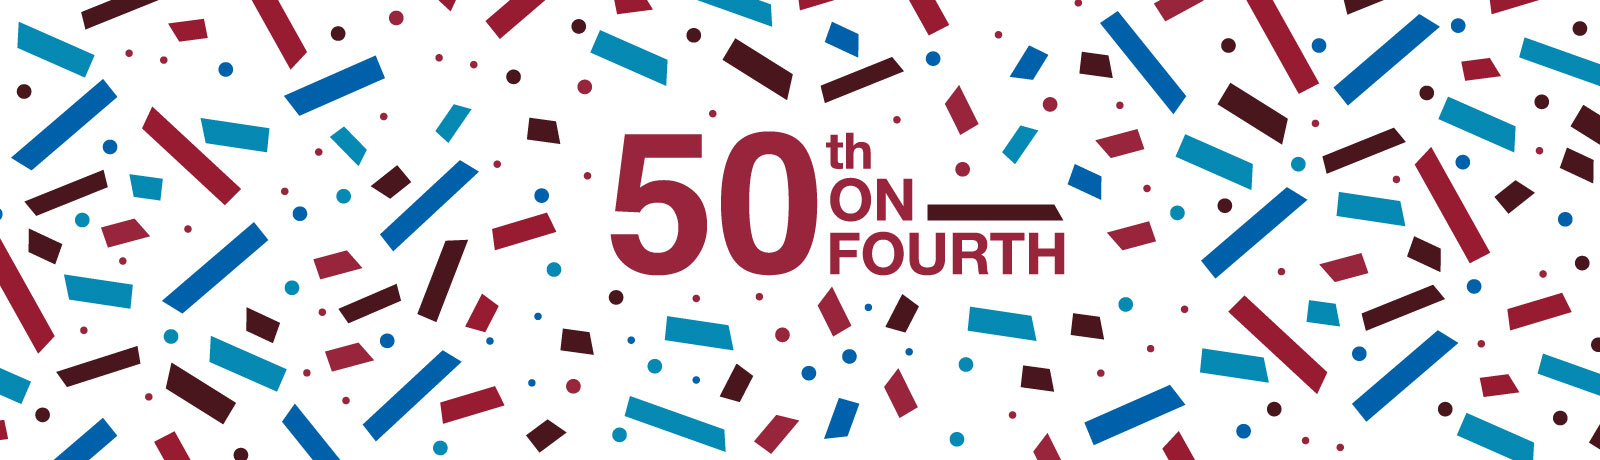 50th anniversary logo with confetti background